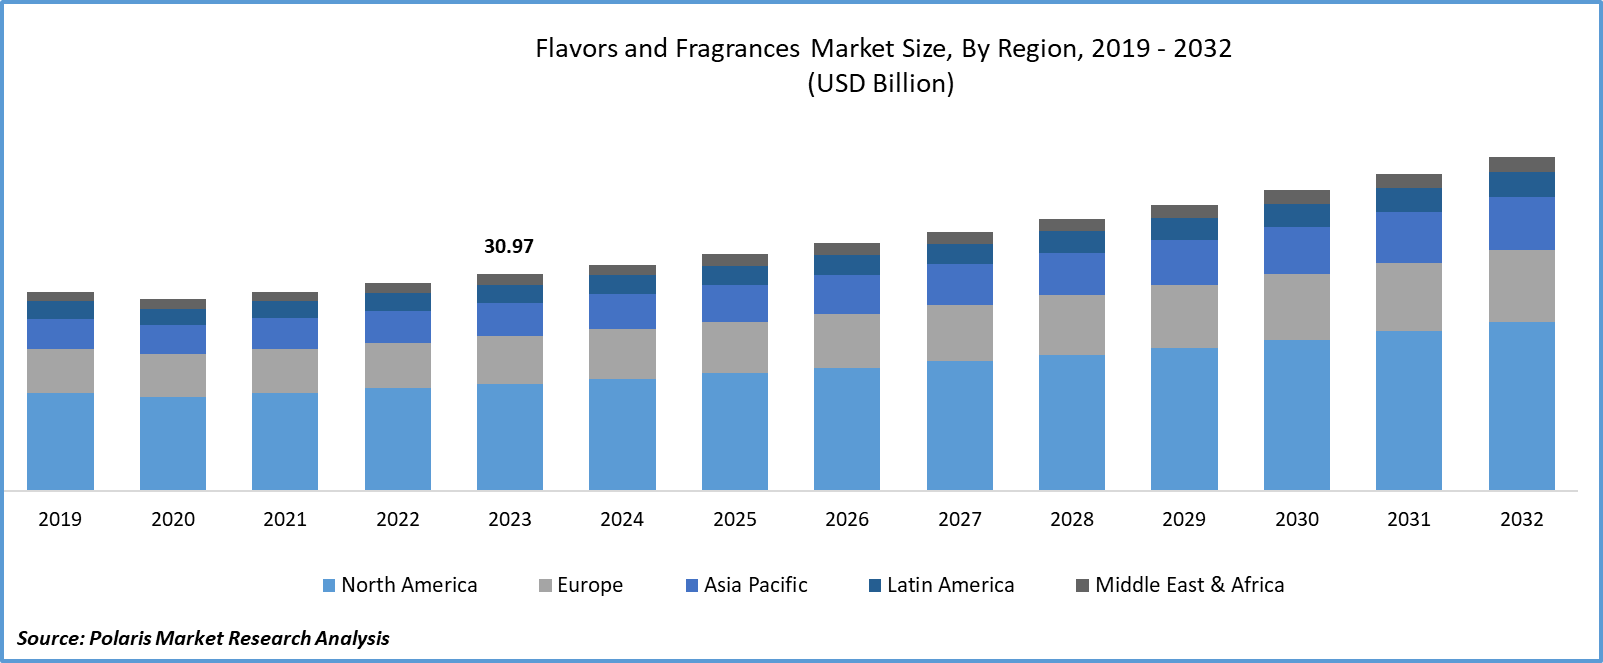 Flavors and Fragrances Market Size